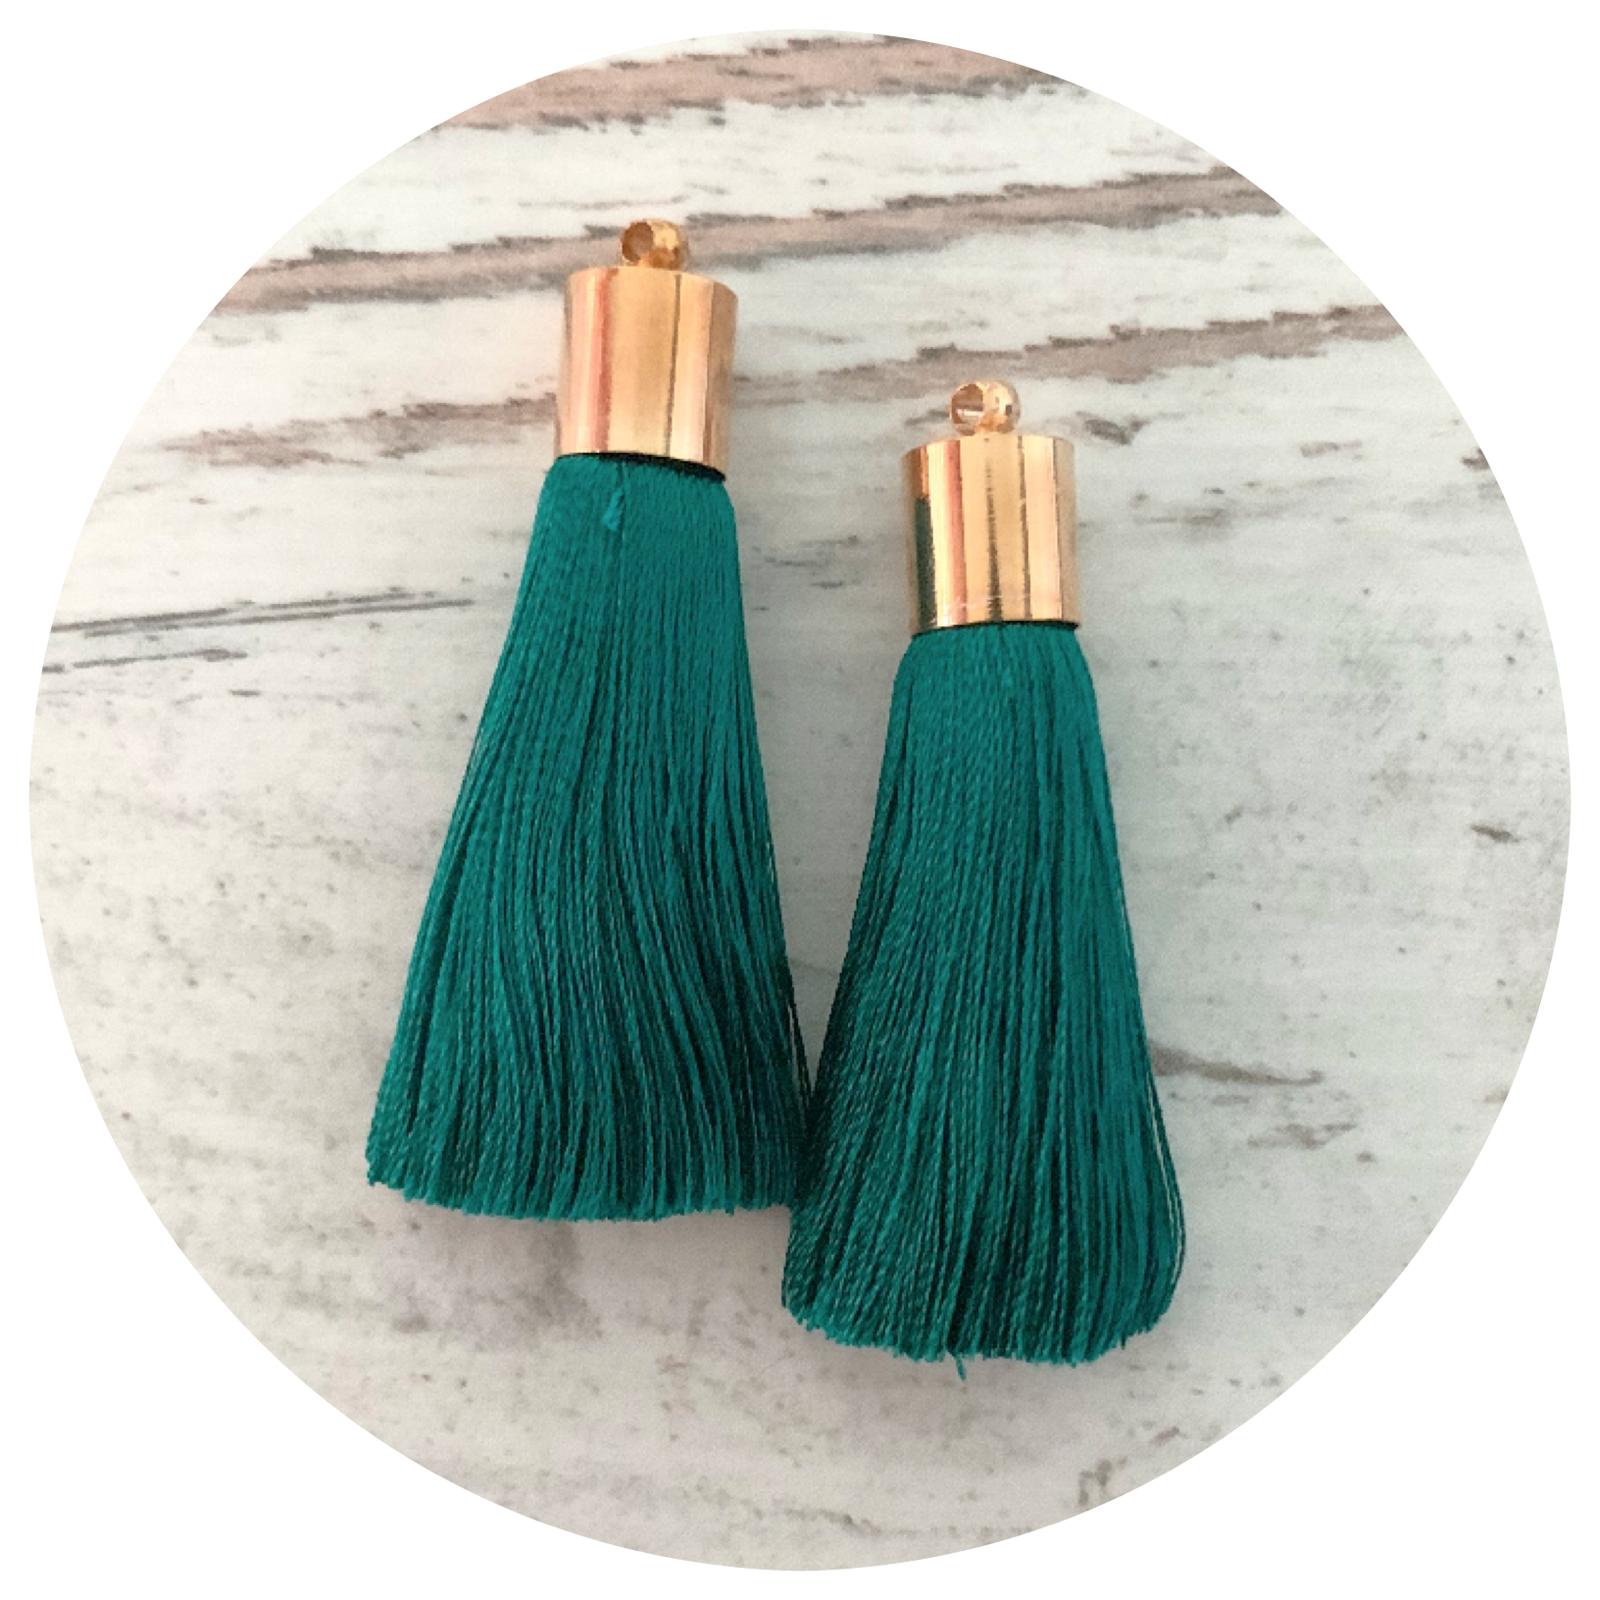 50mm Silk Tassels - Gold Cap - Emerald Green - 2pack - L9505